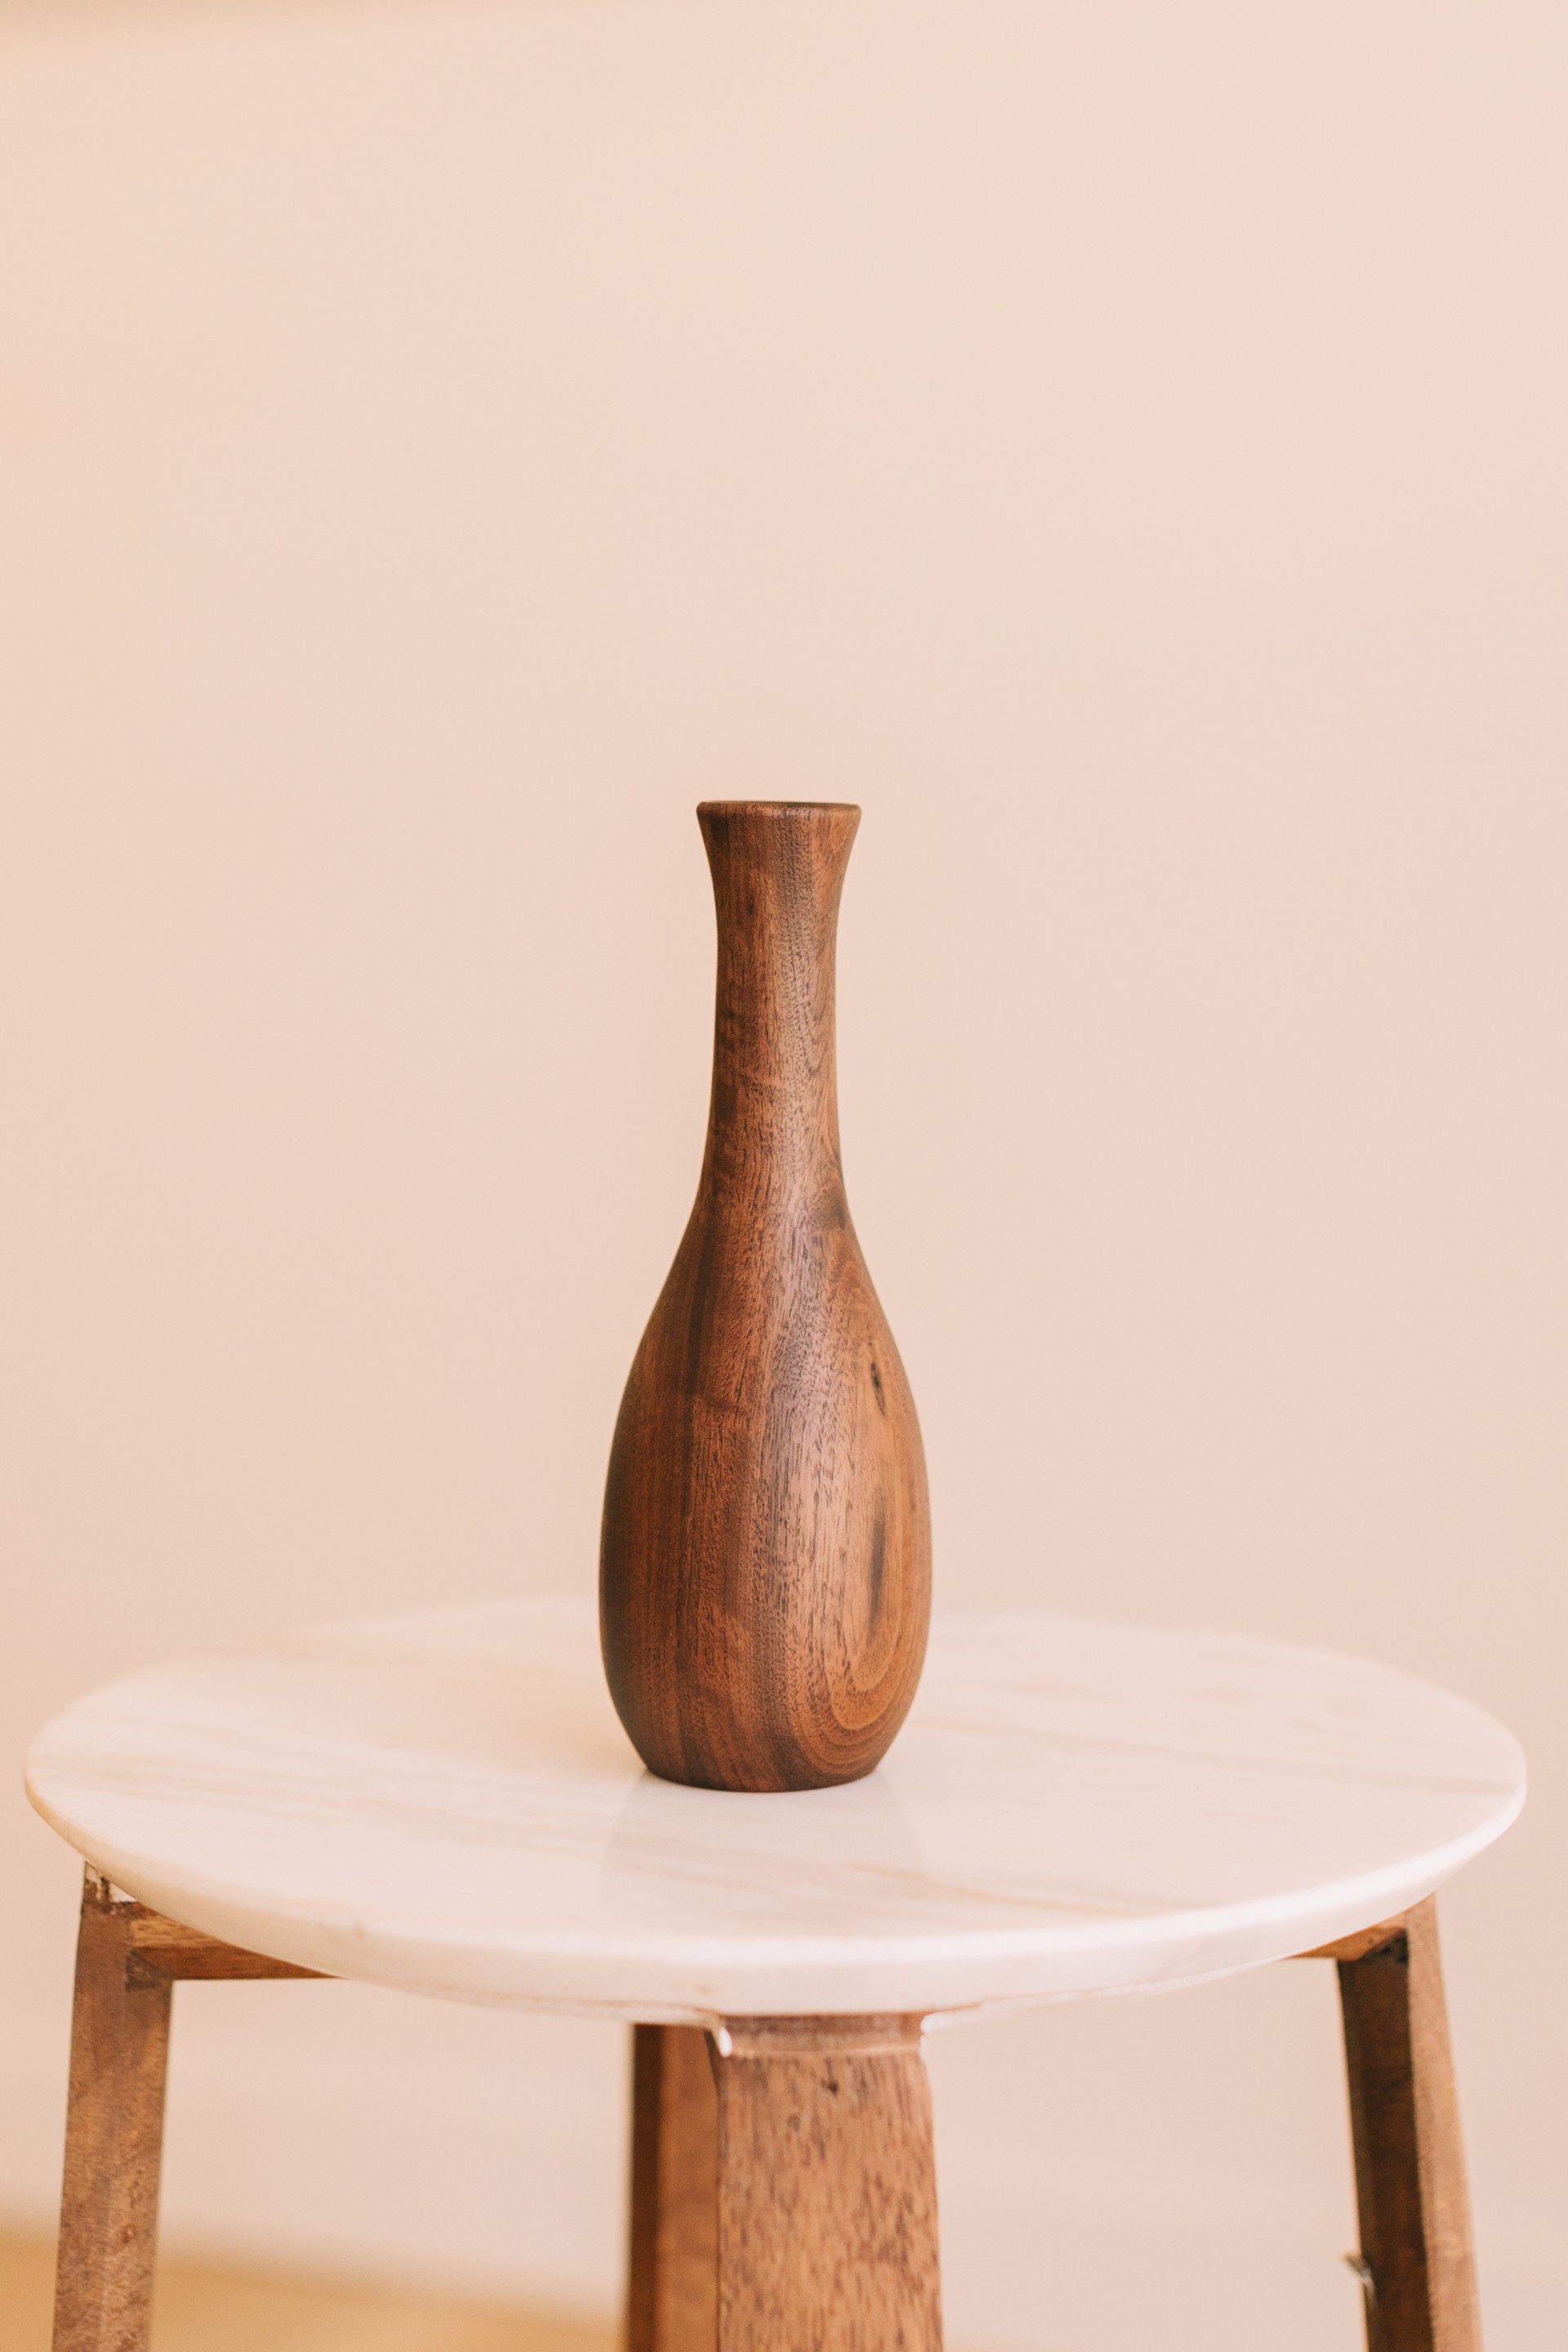 Black Walnut Vase #02 by Anna Naylor